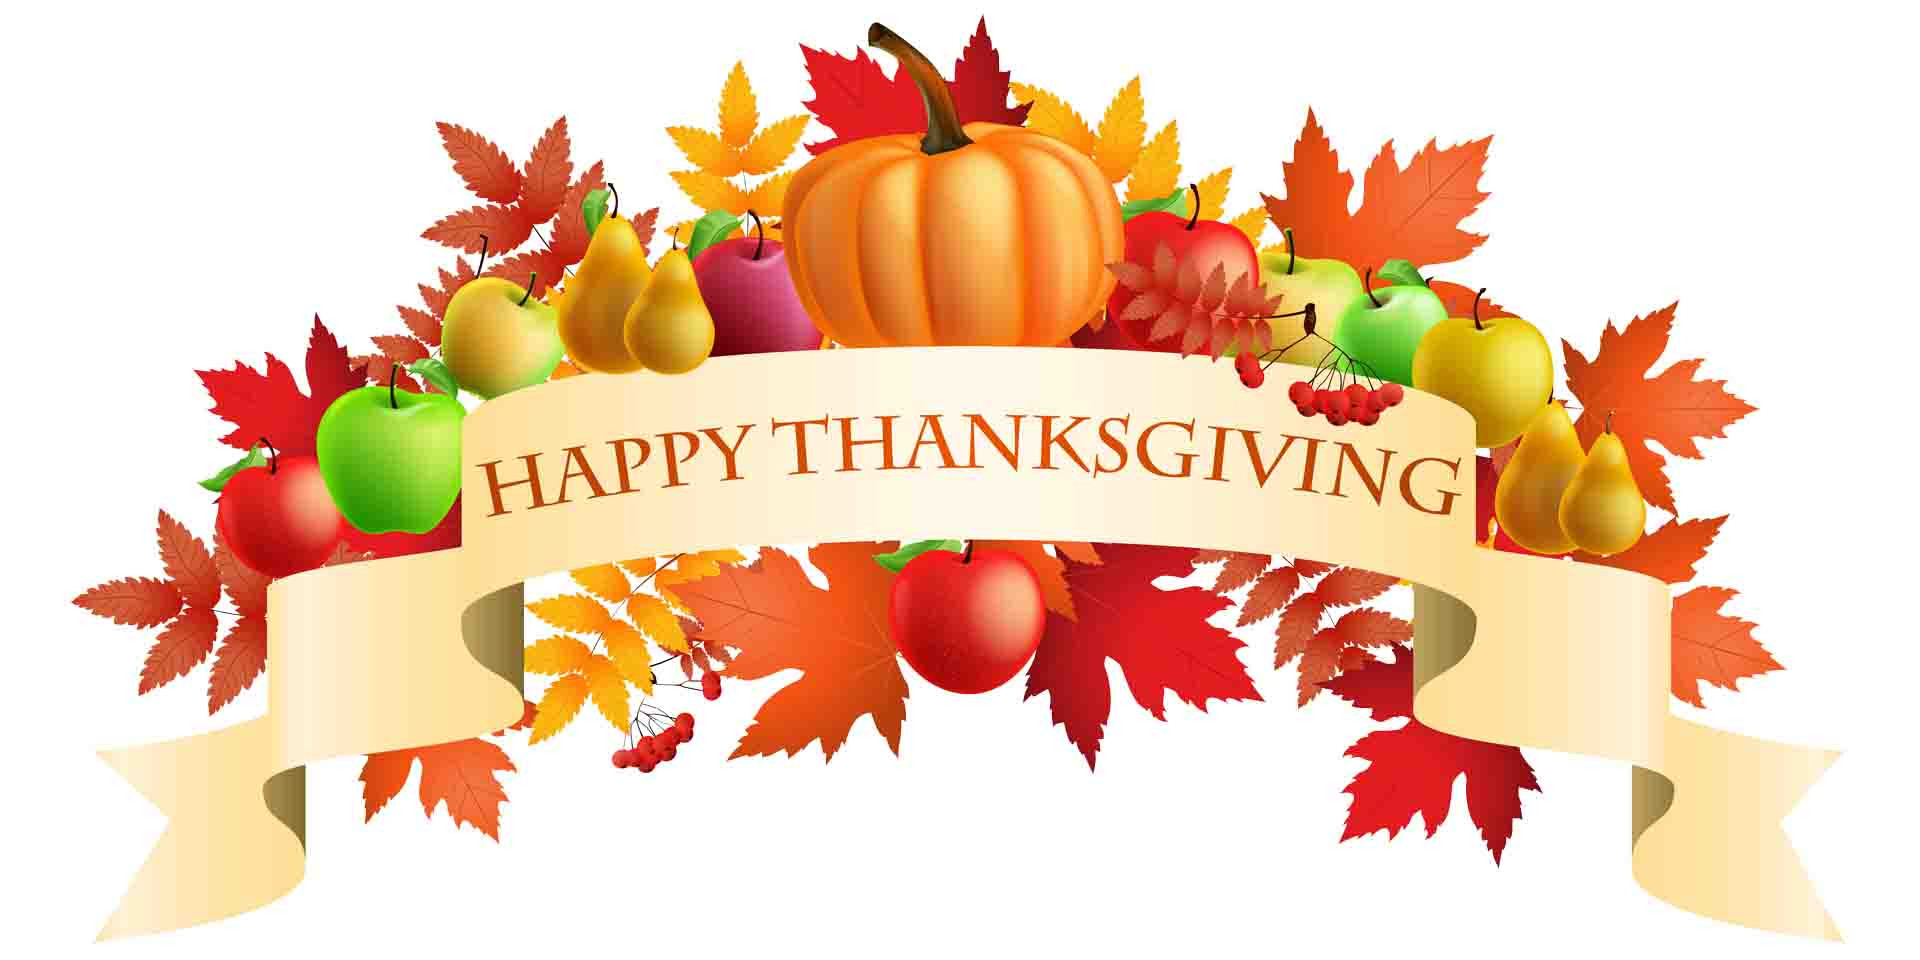 Free Turkey For Thanksgiving 2020
 2016 Thanksgiving Buffet at Golden Ocala